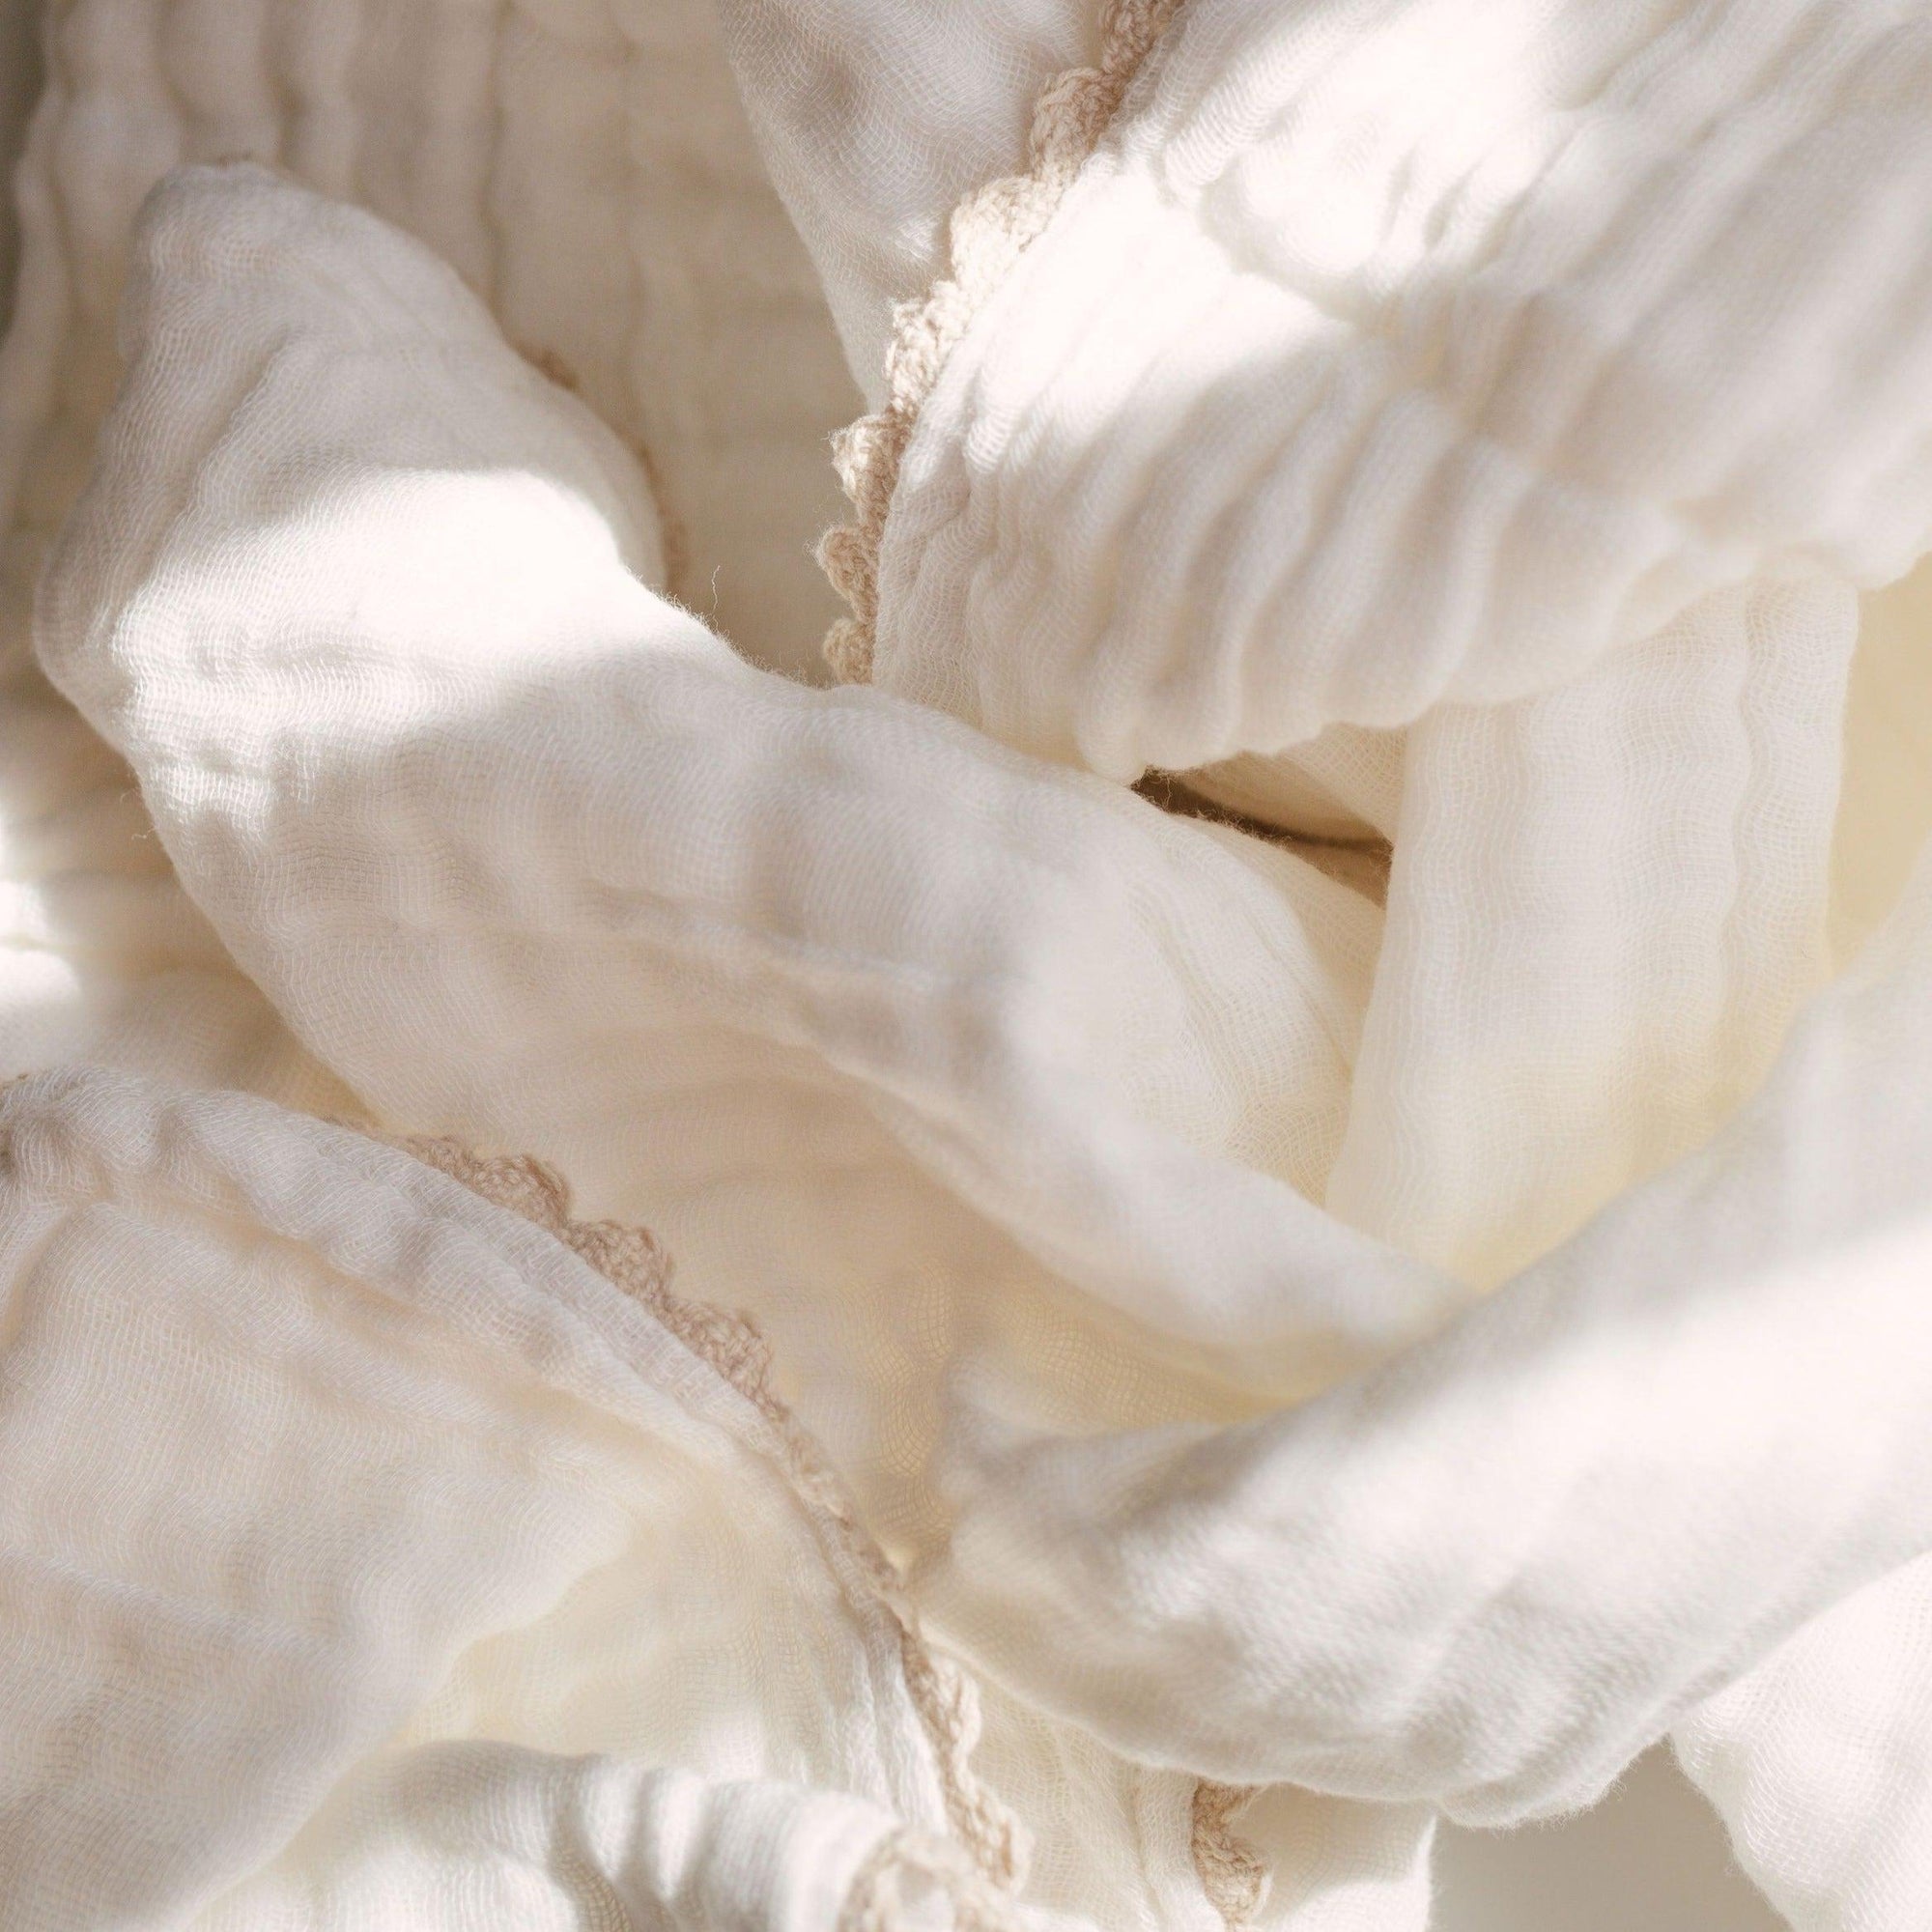 Close up image of the Bundl 100% organic gauze blanket.